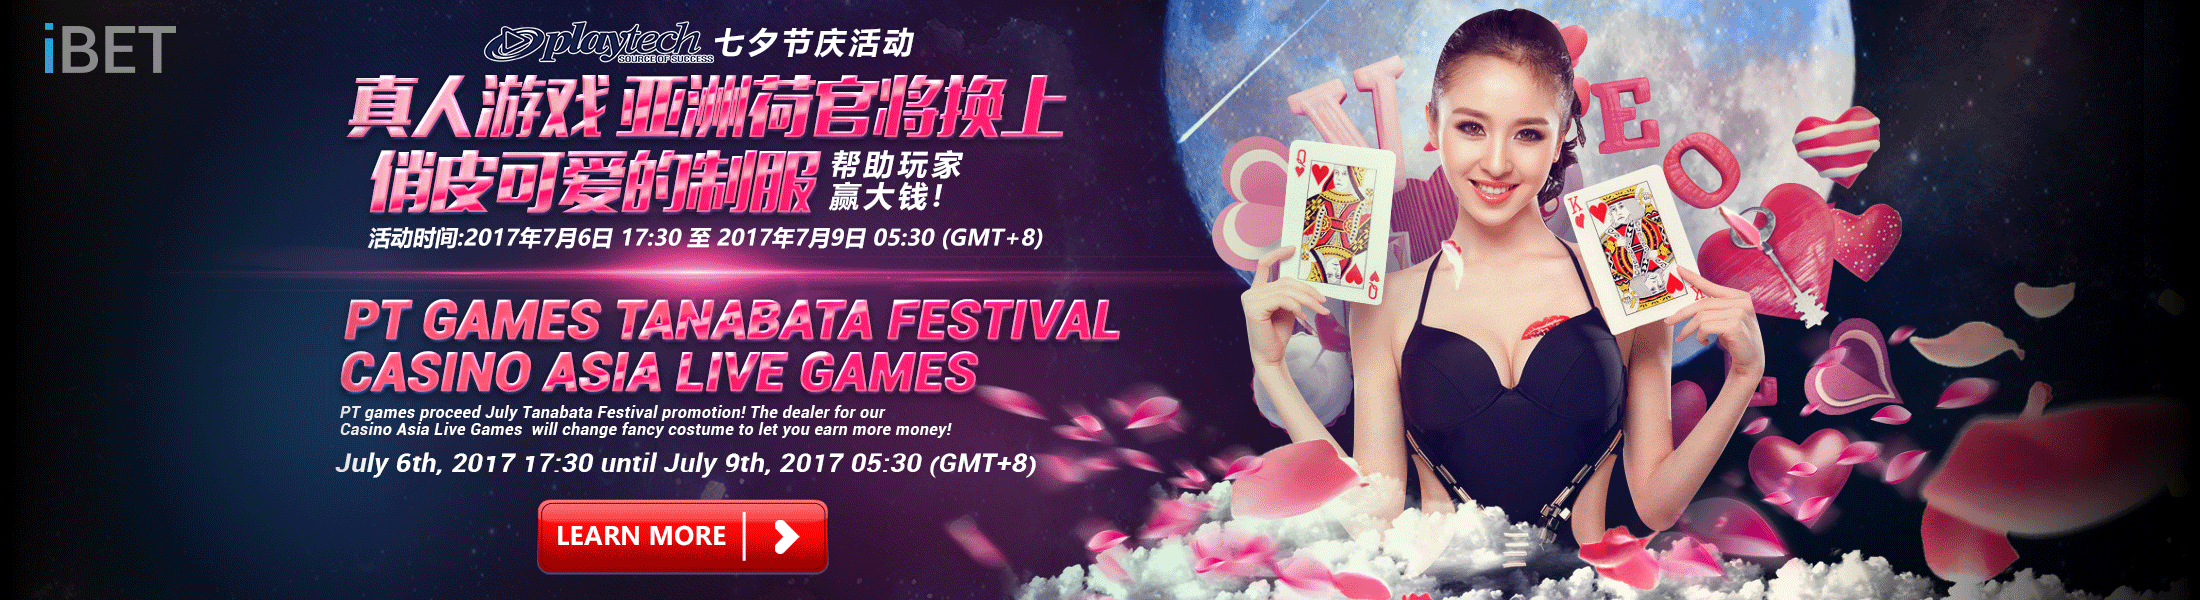 4D Rasule iBET PT Live Game Tanabata Festival